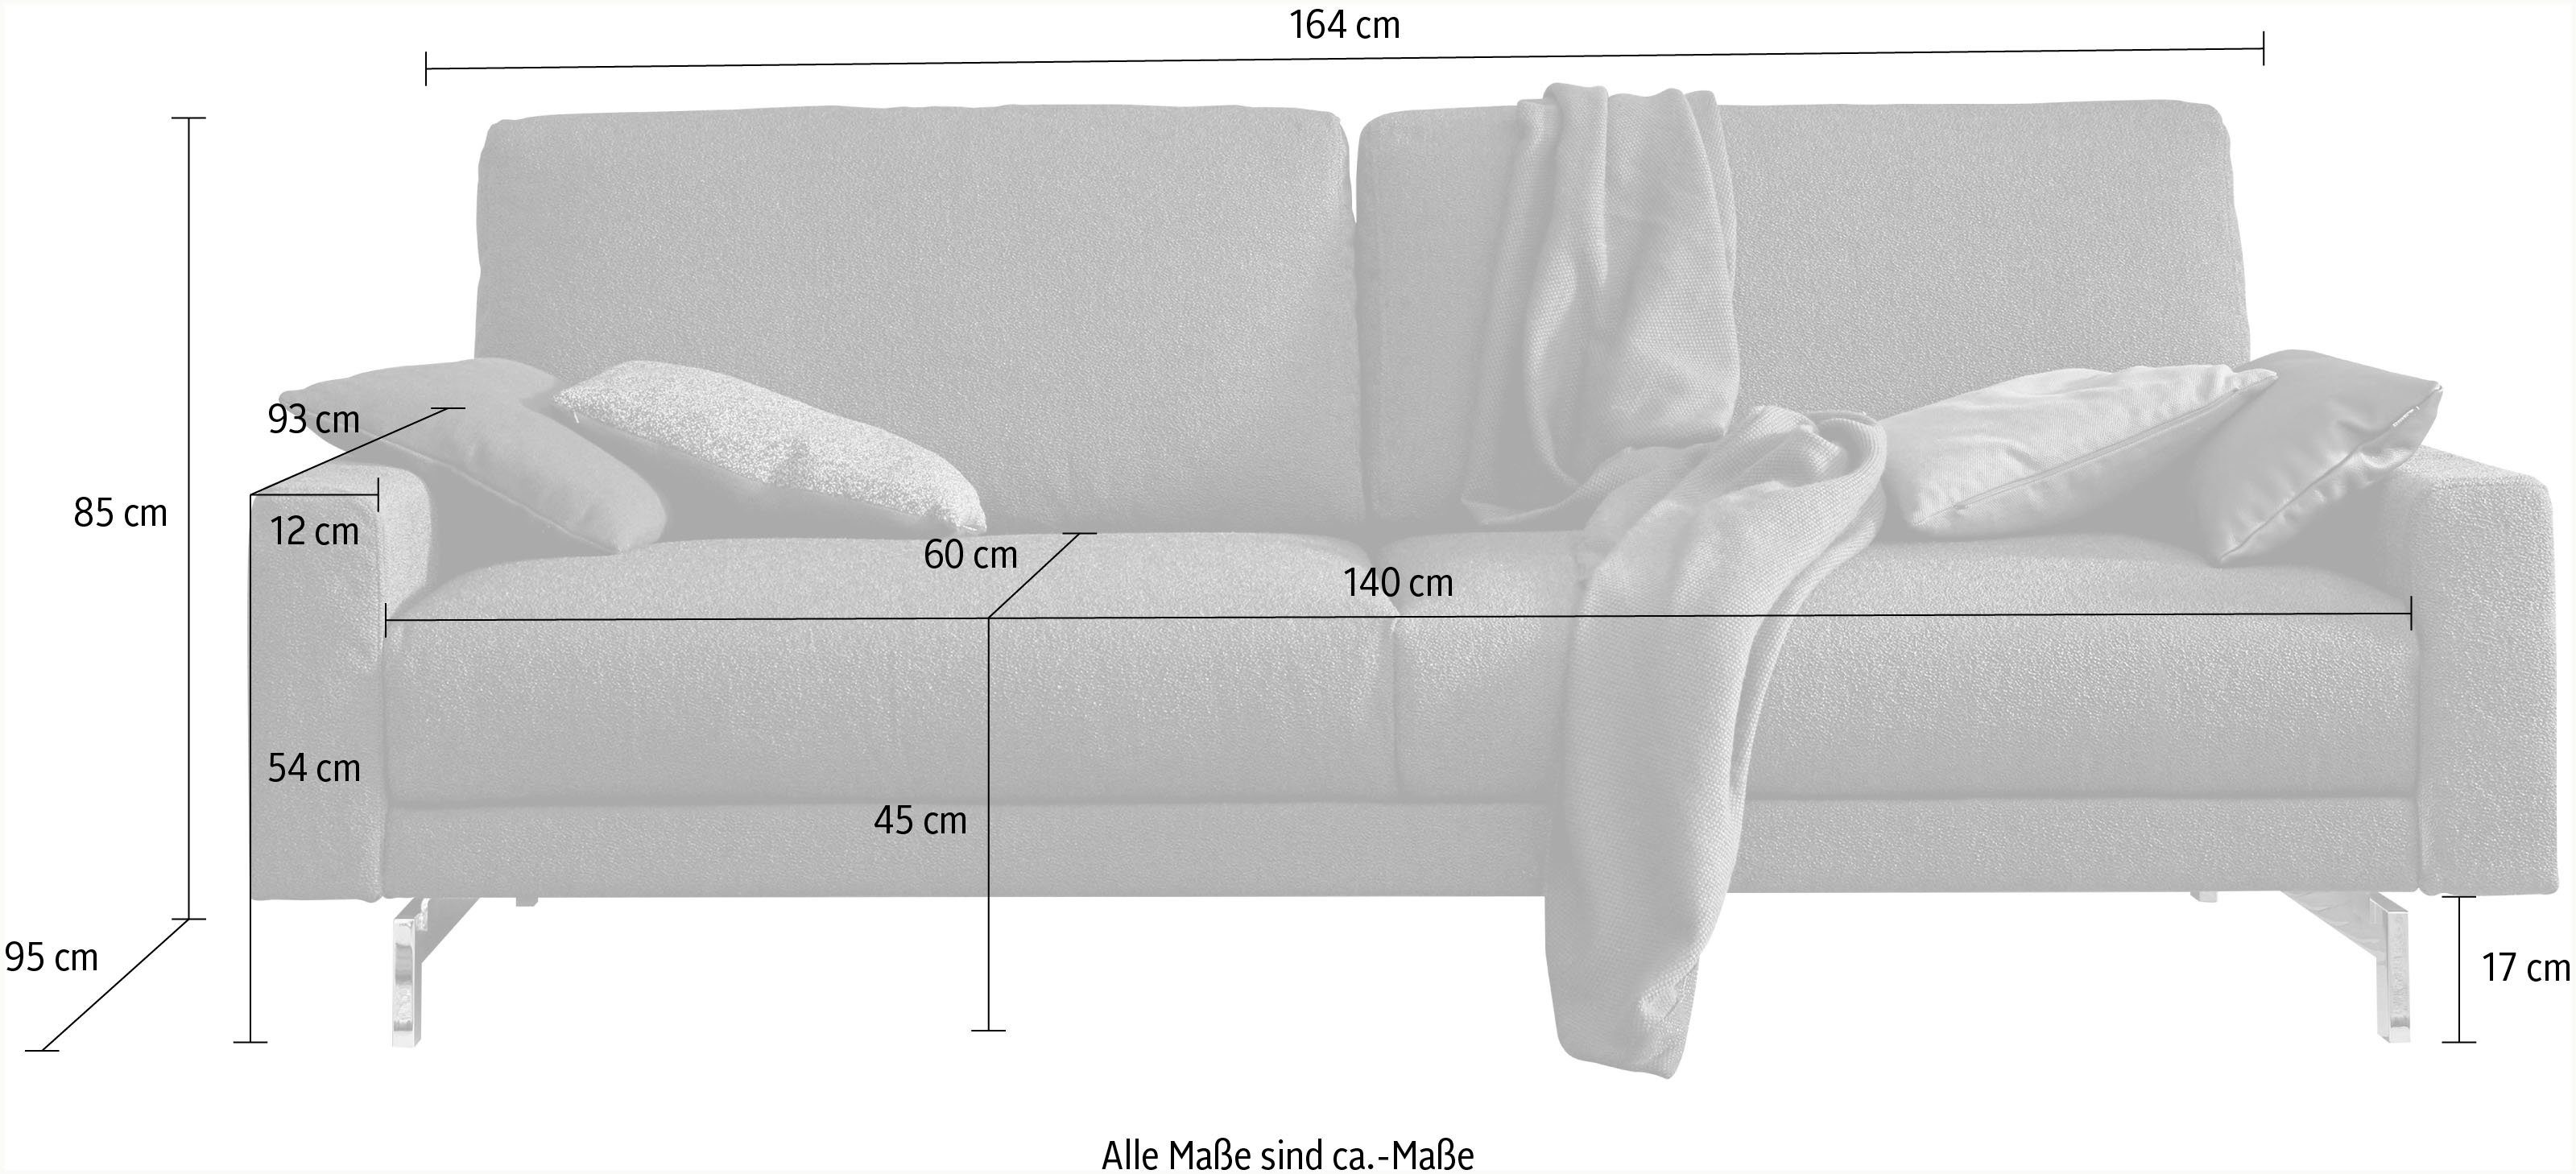 Armlehne chromfarben glänzend, cm Breite 164 hülsta niedrig, 2-Sitzer Fuß hs.450, sofa